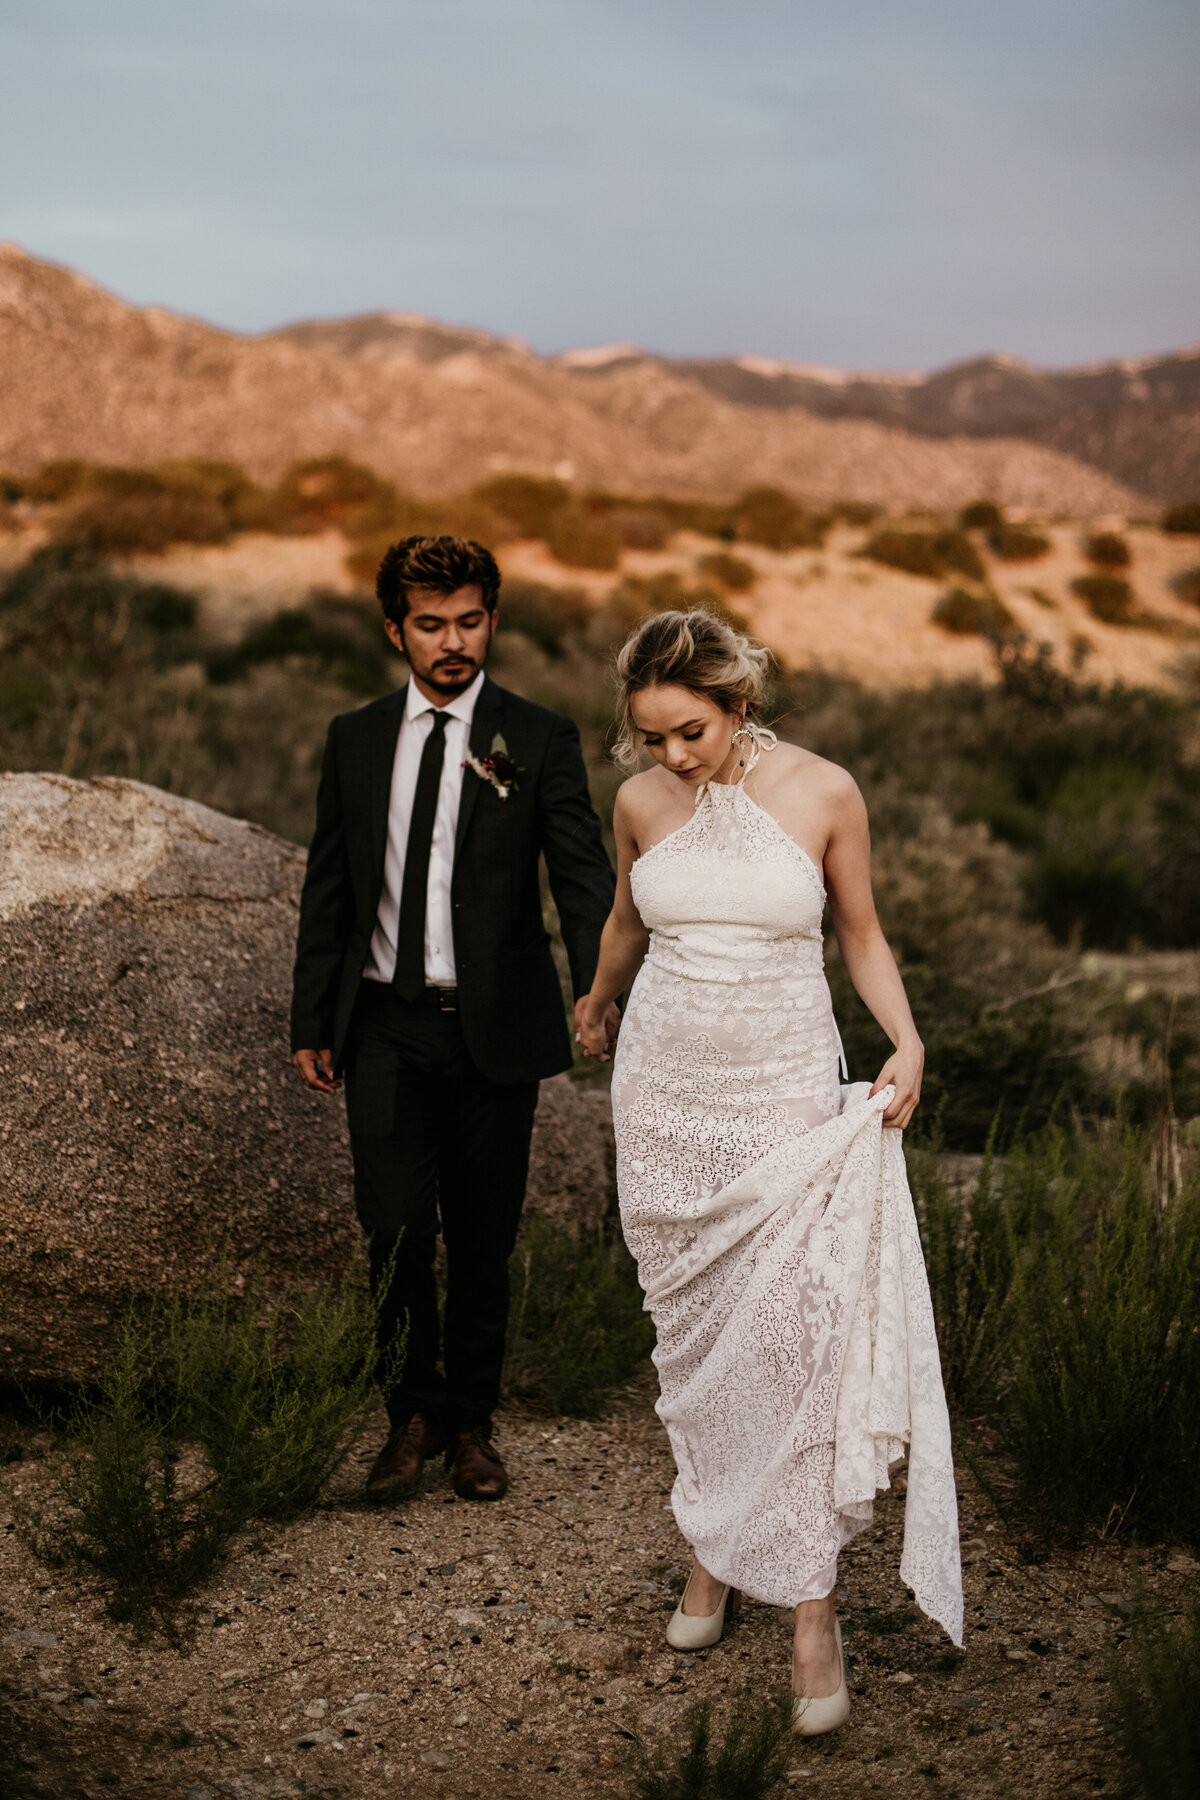 newlyweds walking in the desert